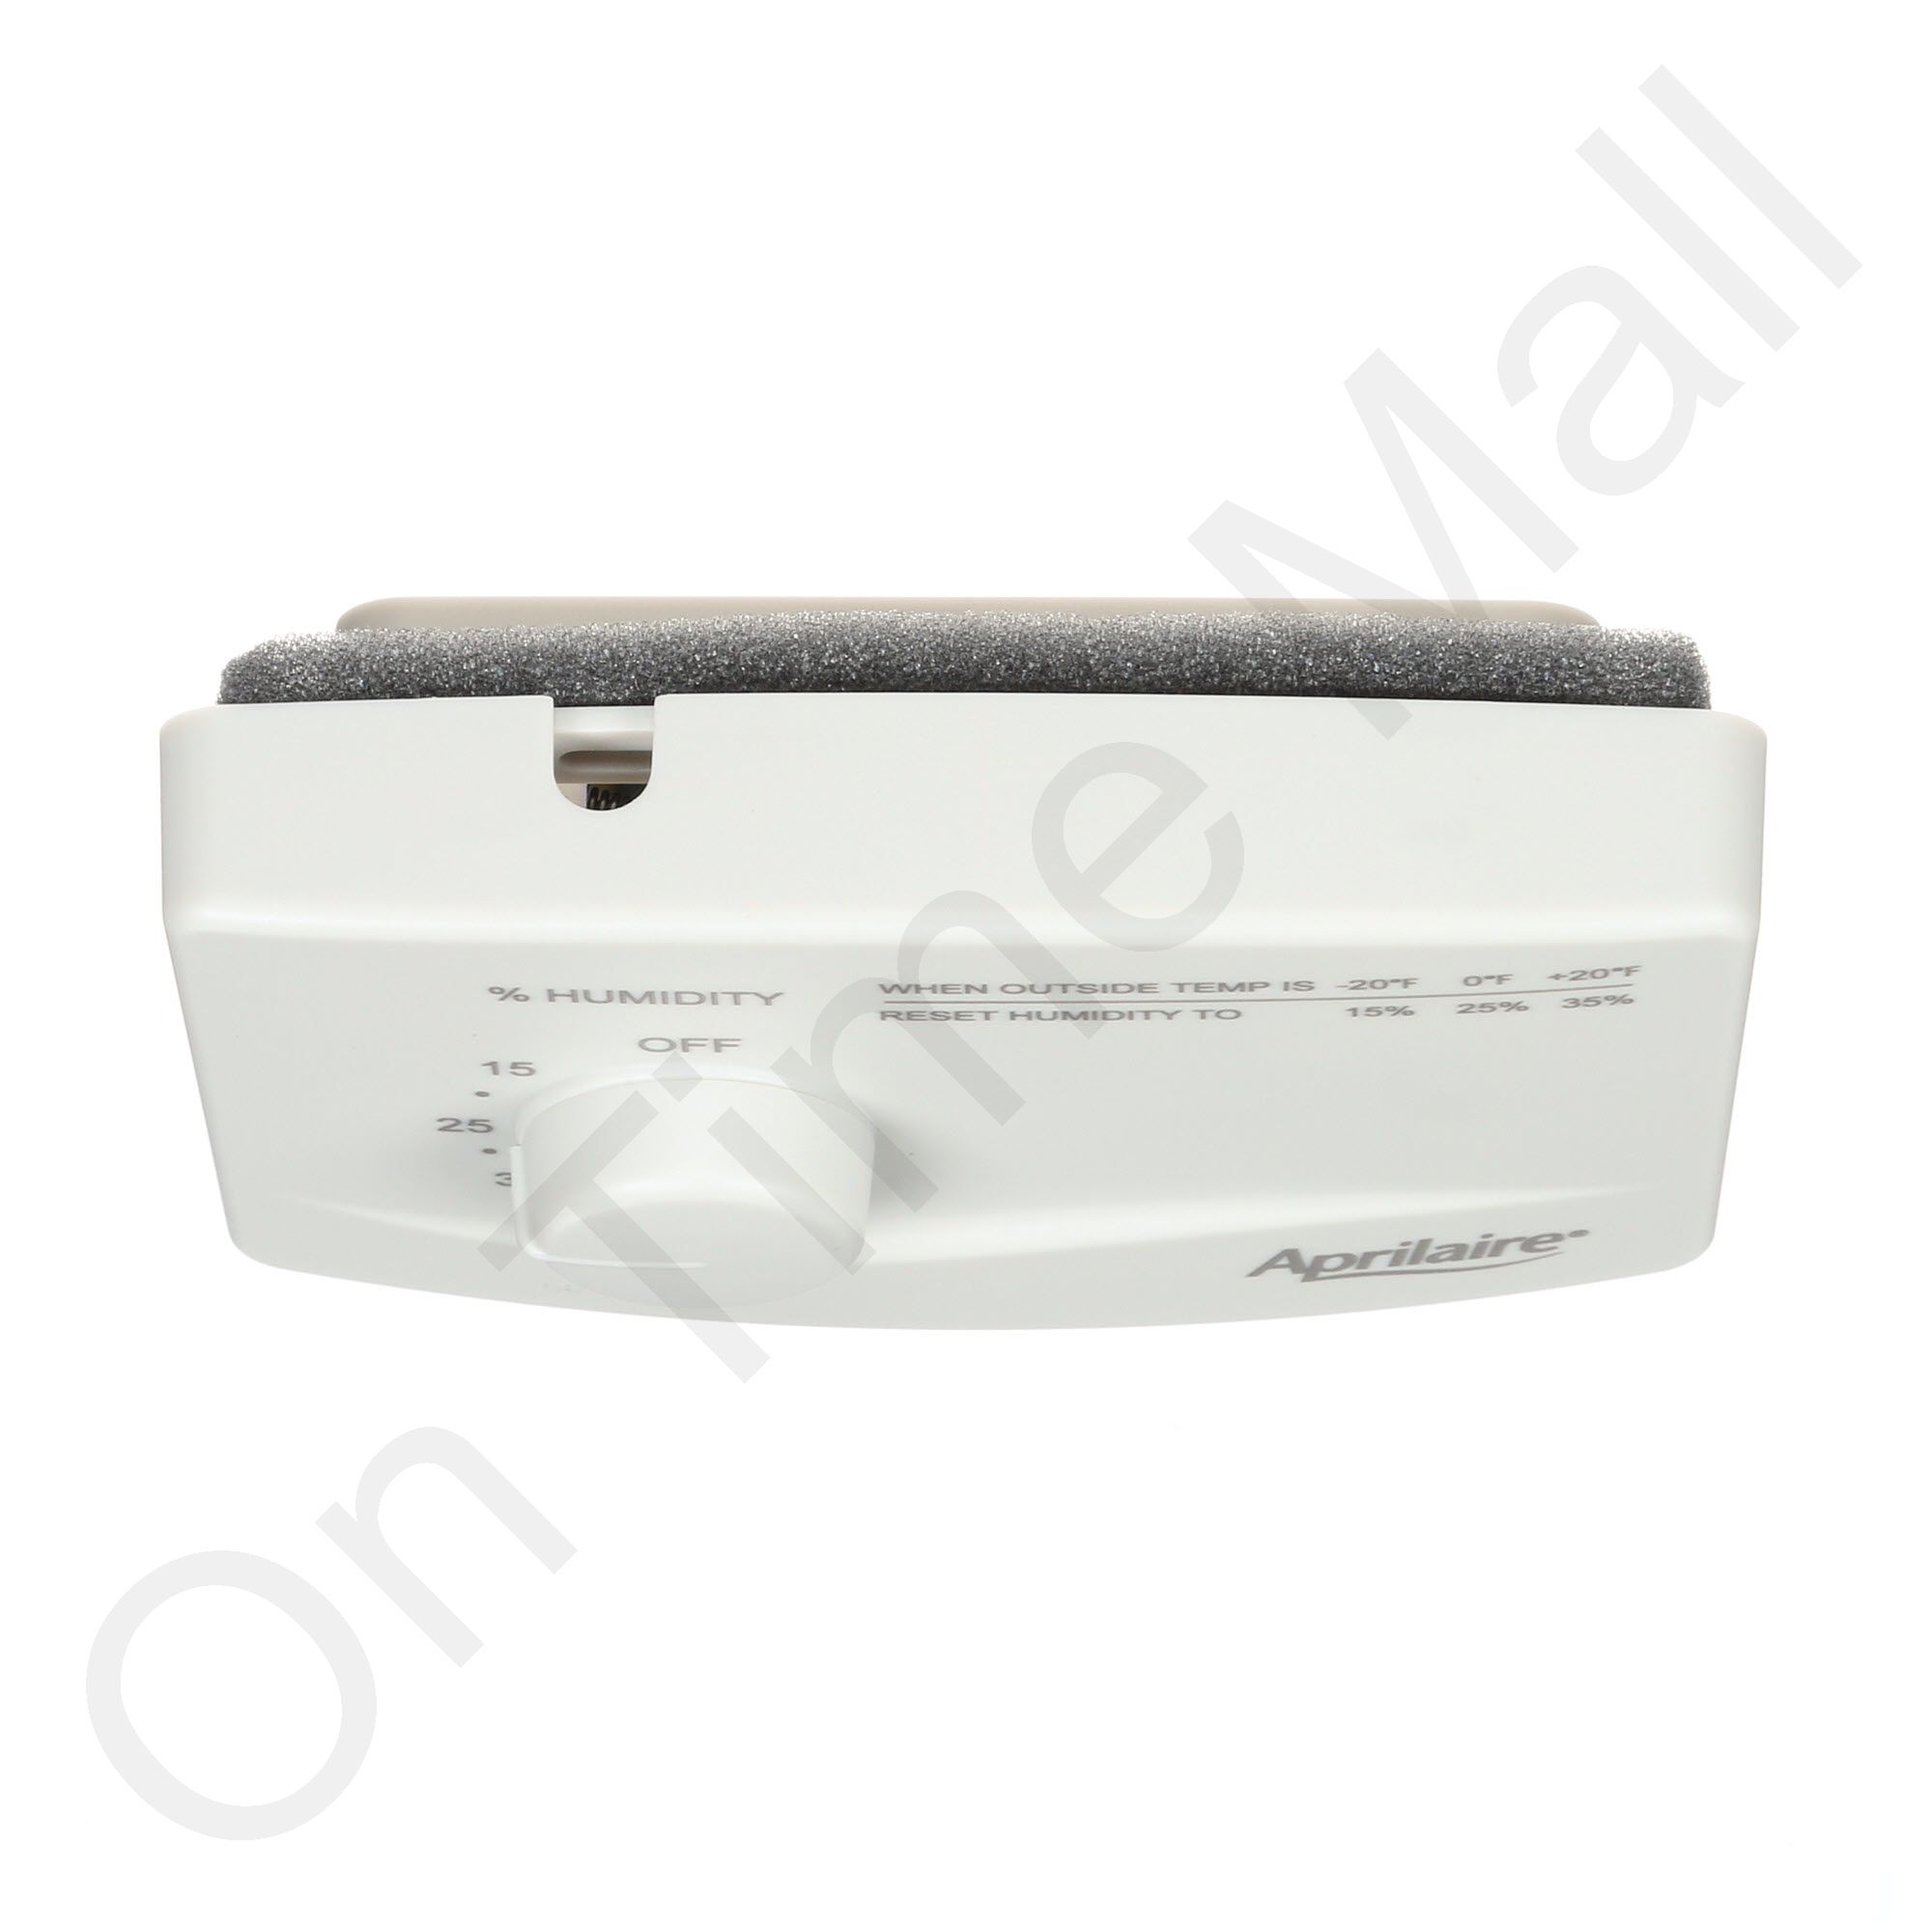 Aprilaire 4655 Manual Humidistat Humidifier